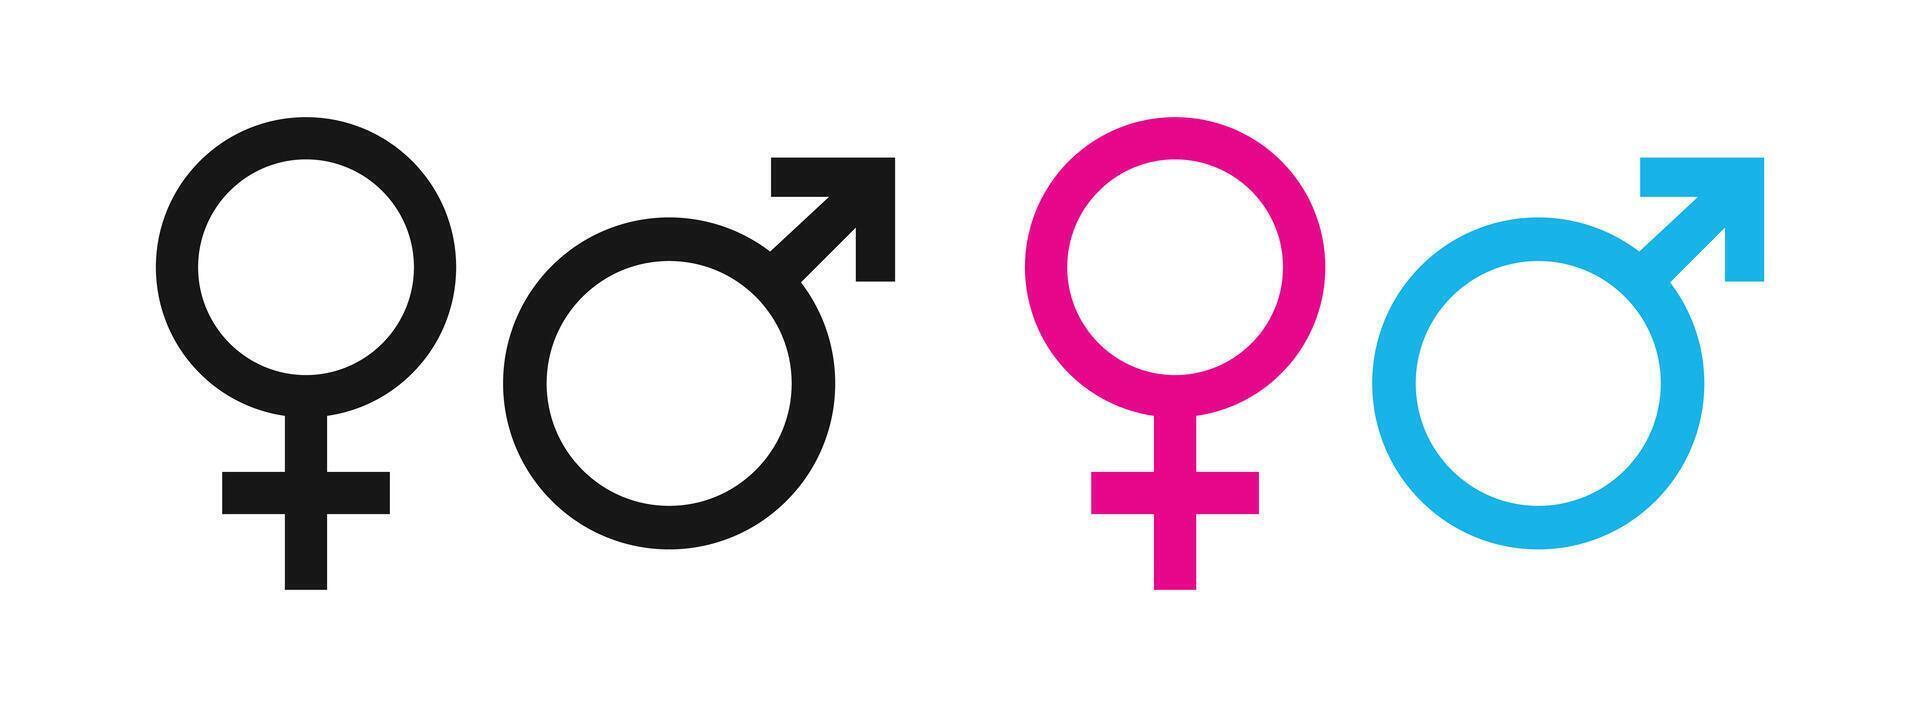 Male and Female gender symbols. Gender sign on white background. vector